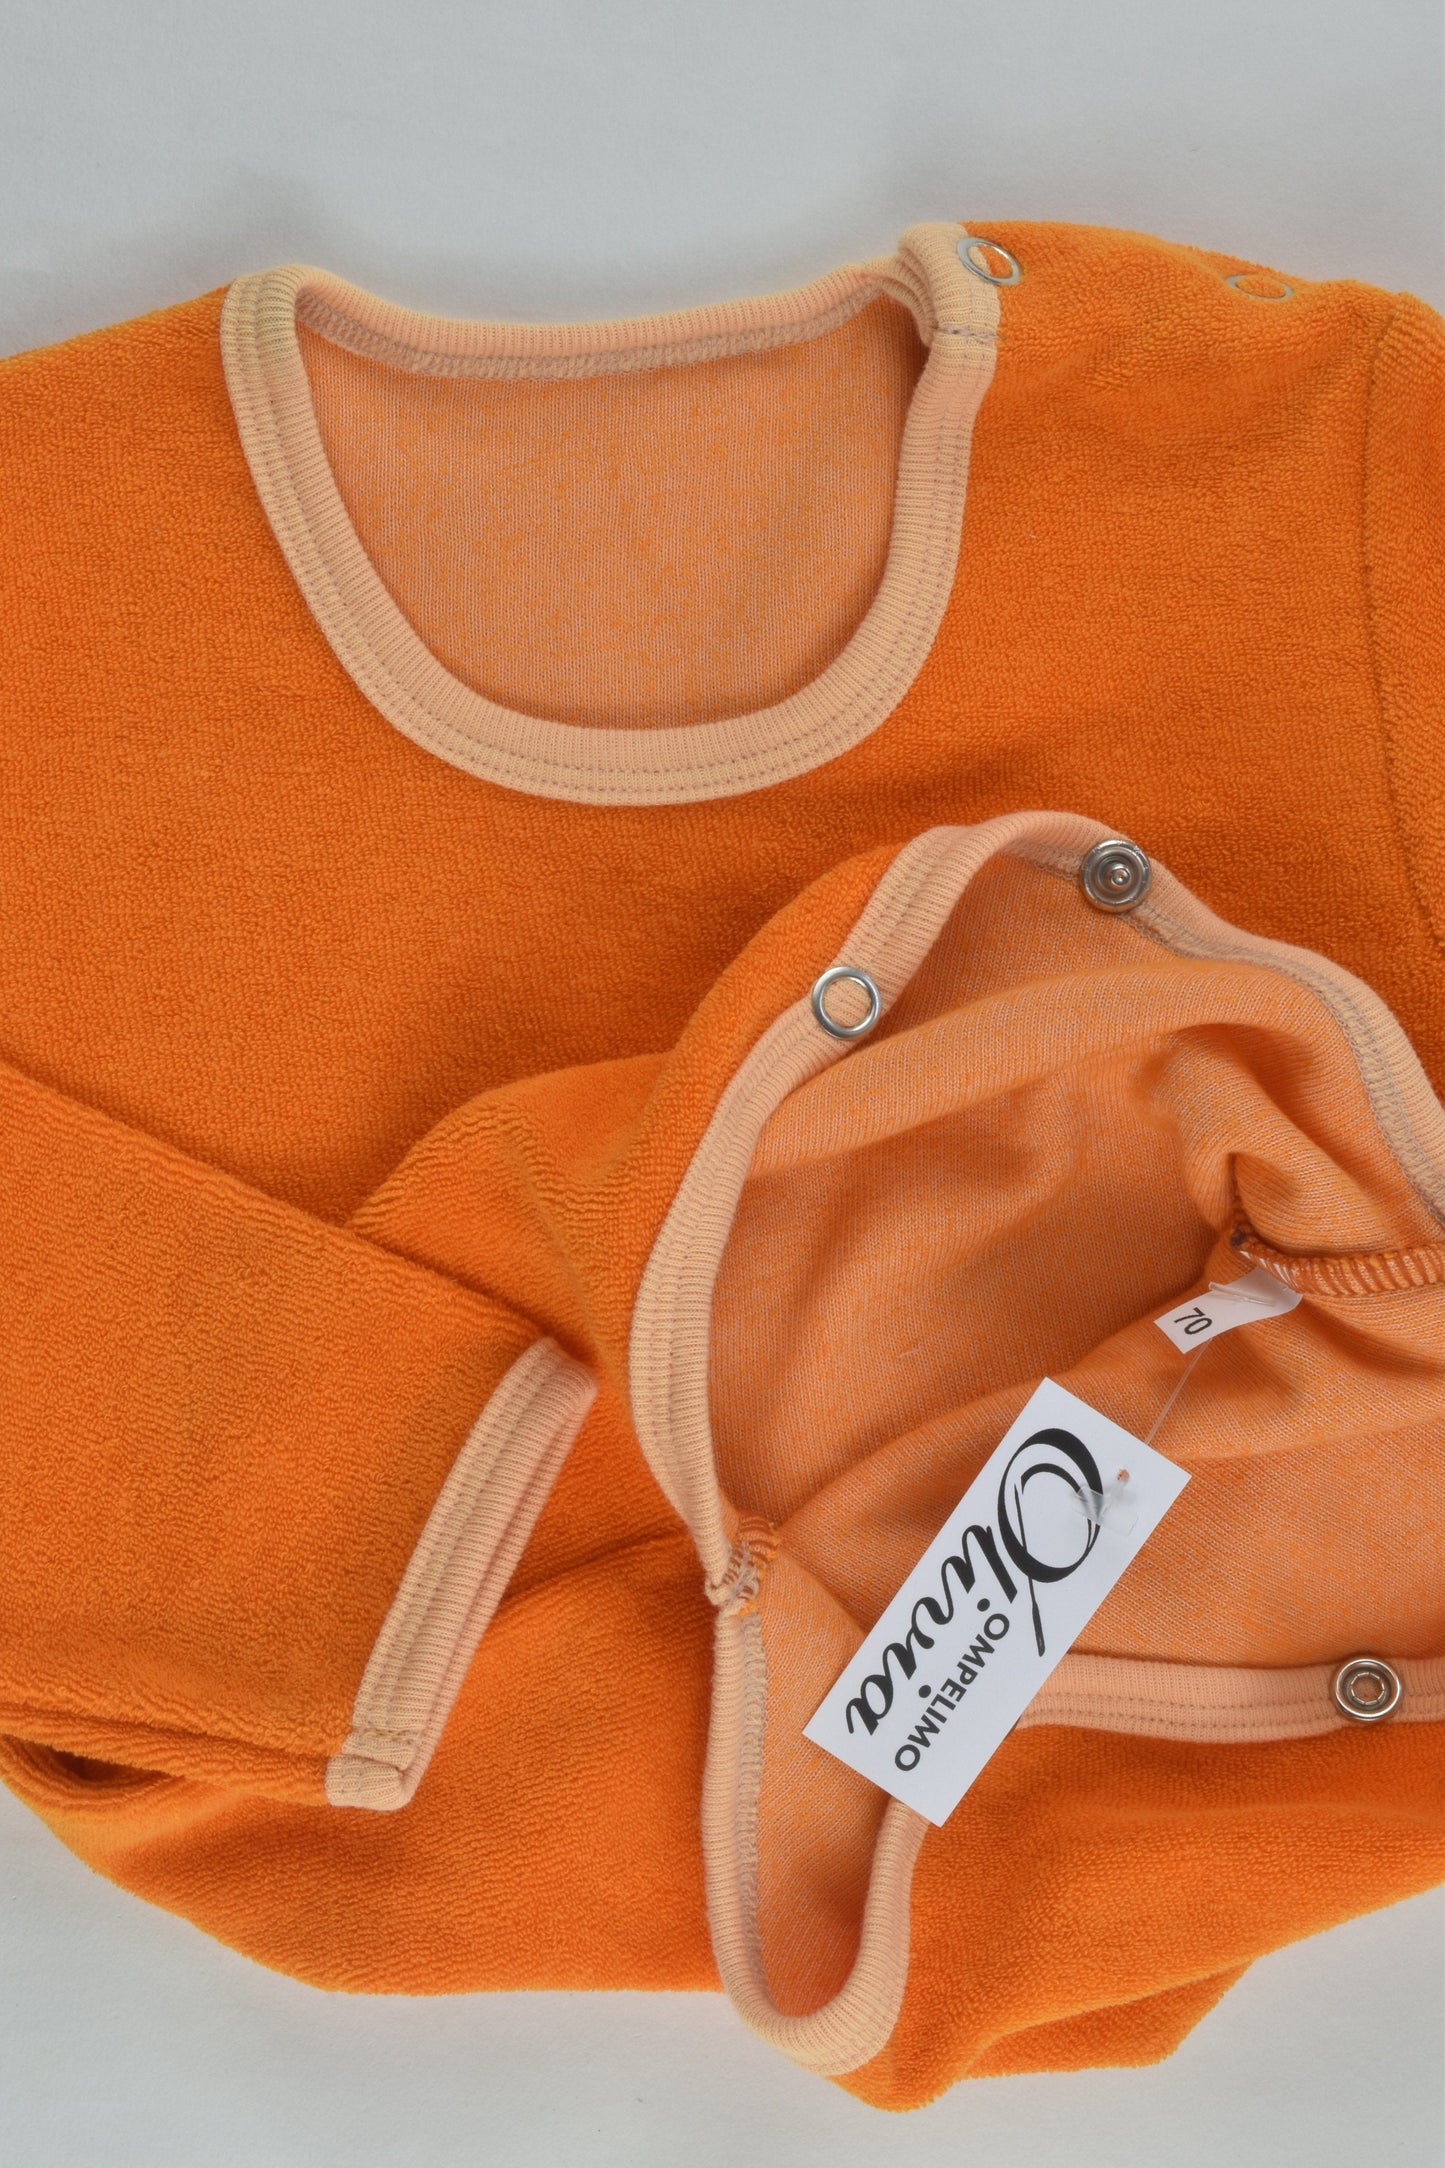 NEW Ompelimo Olivia Size 0 (70 cm) Terry Bodysuit